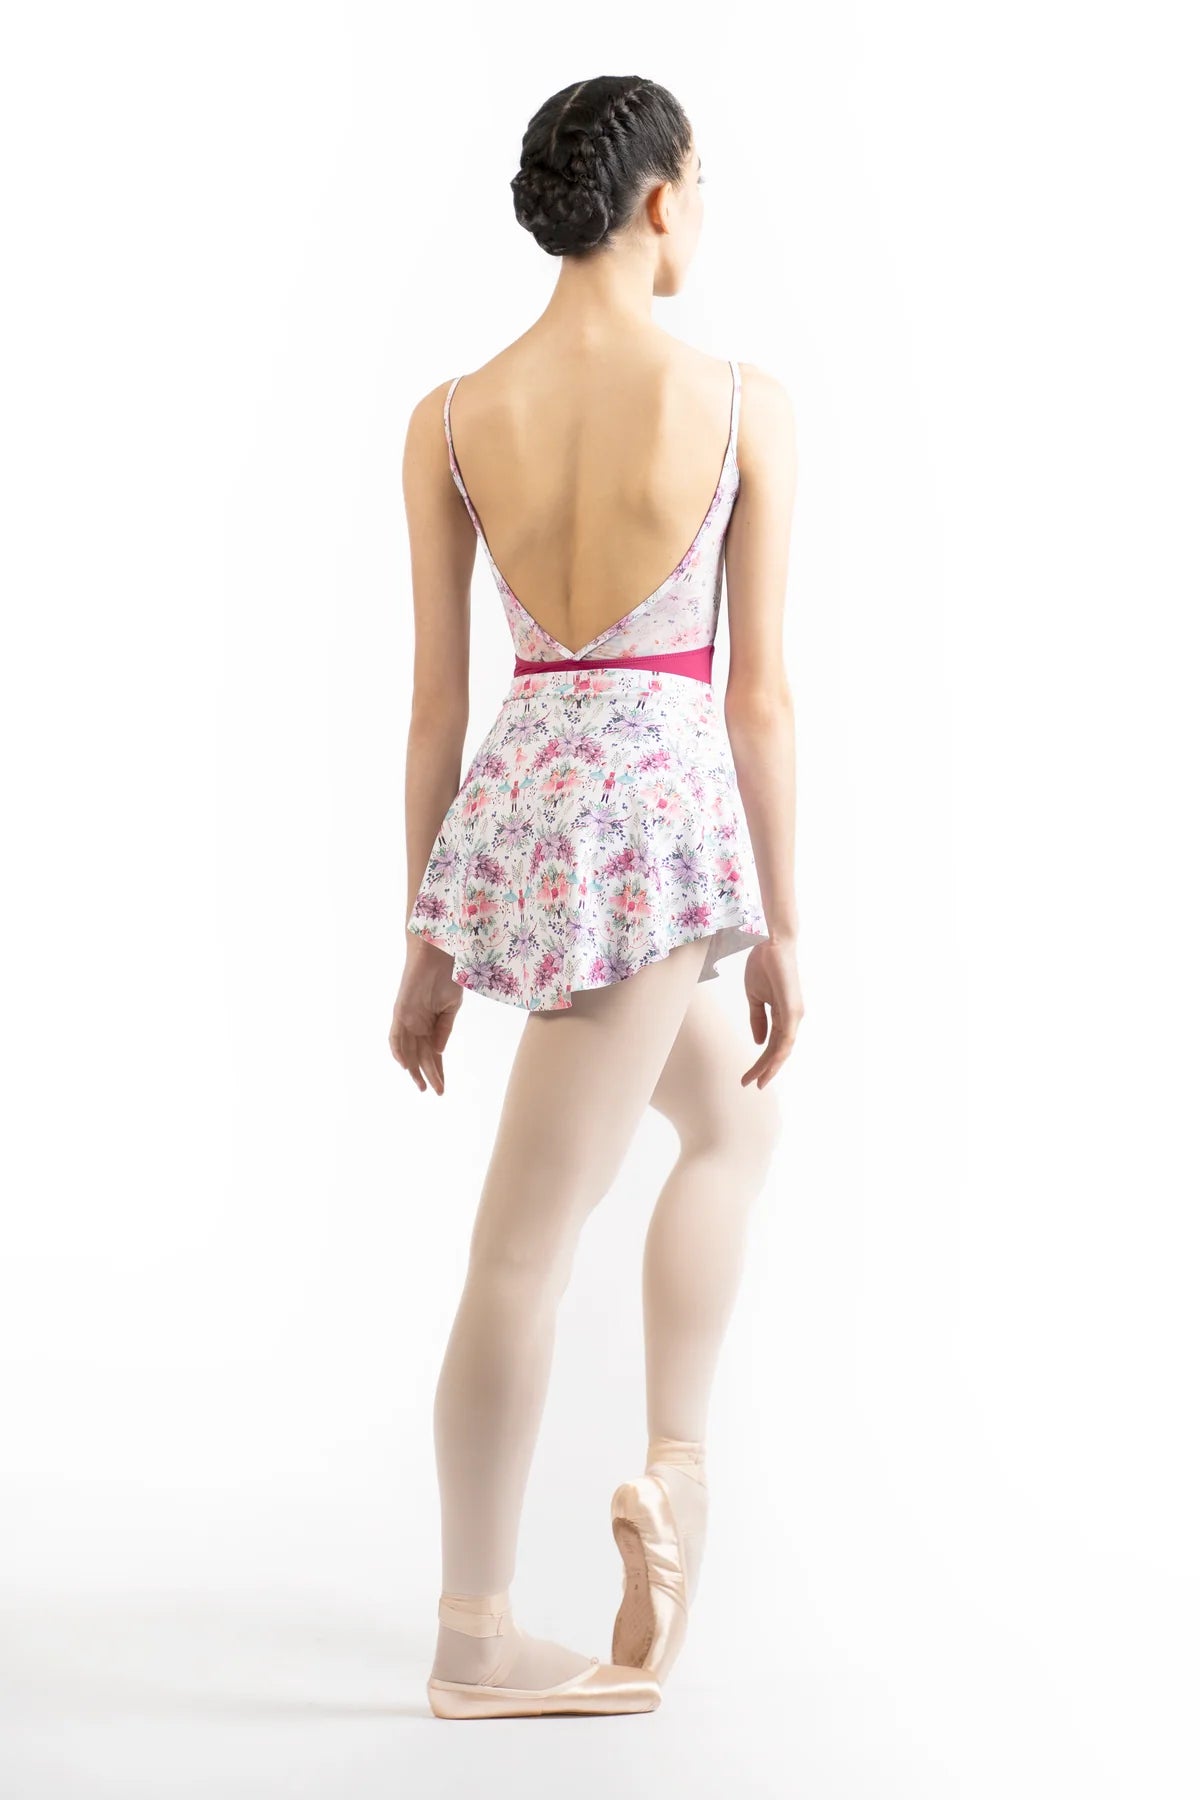 Danse De Paris Skirt in Nutcracker Pattern - SA/MA